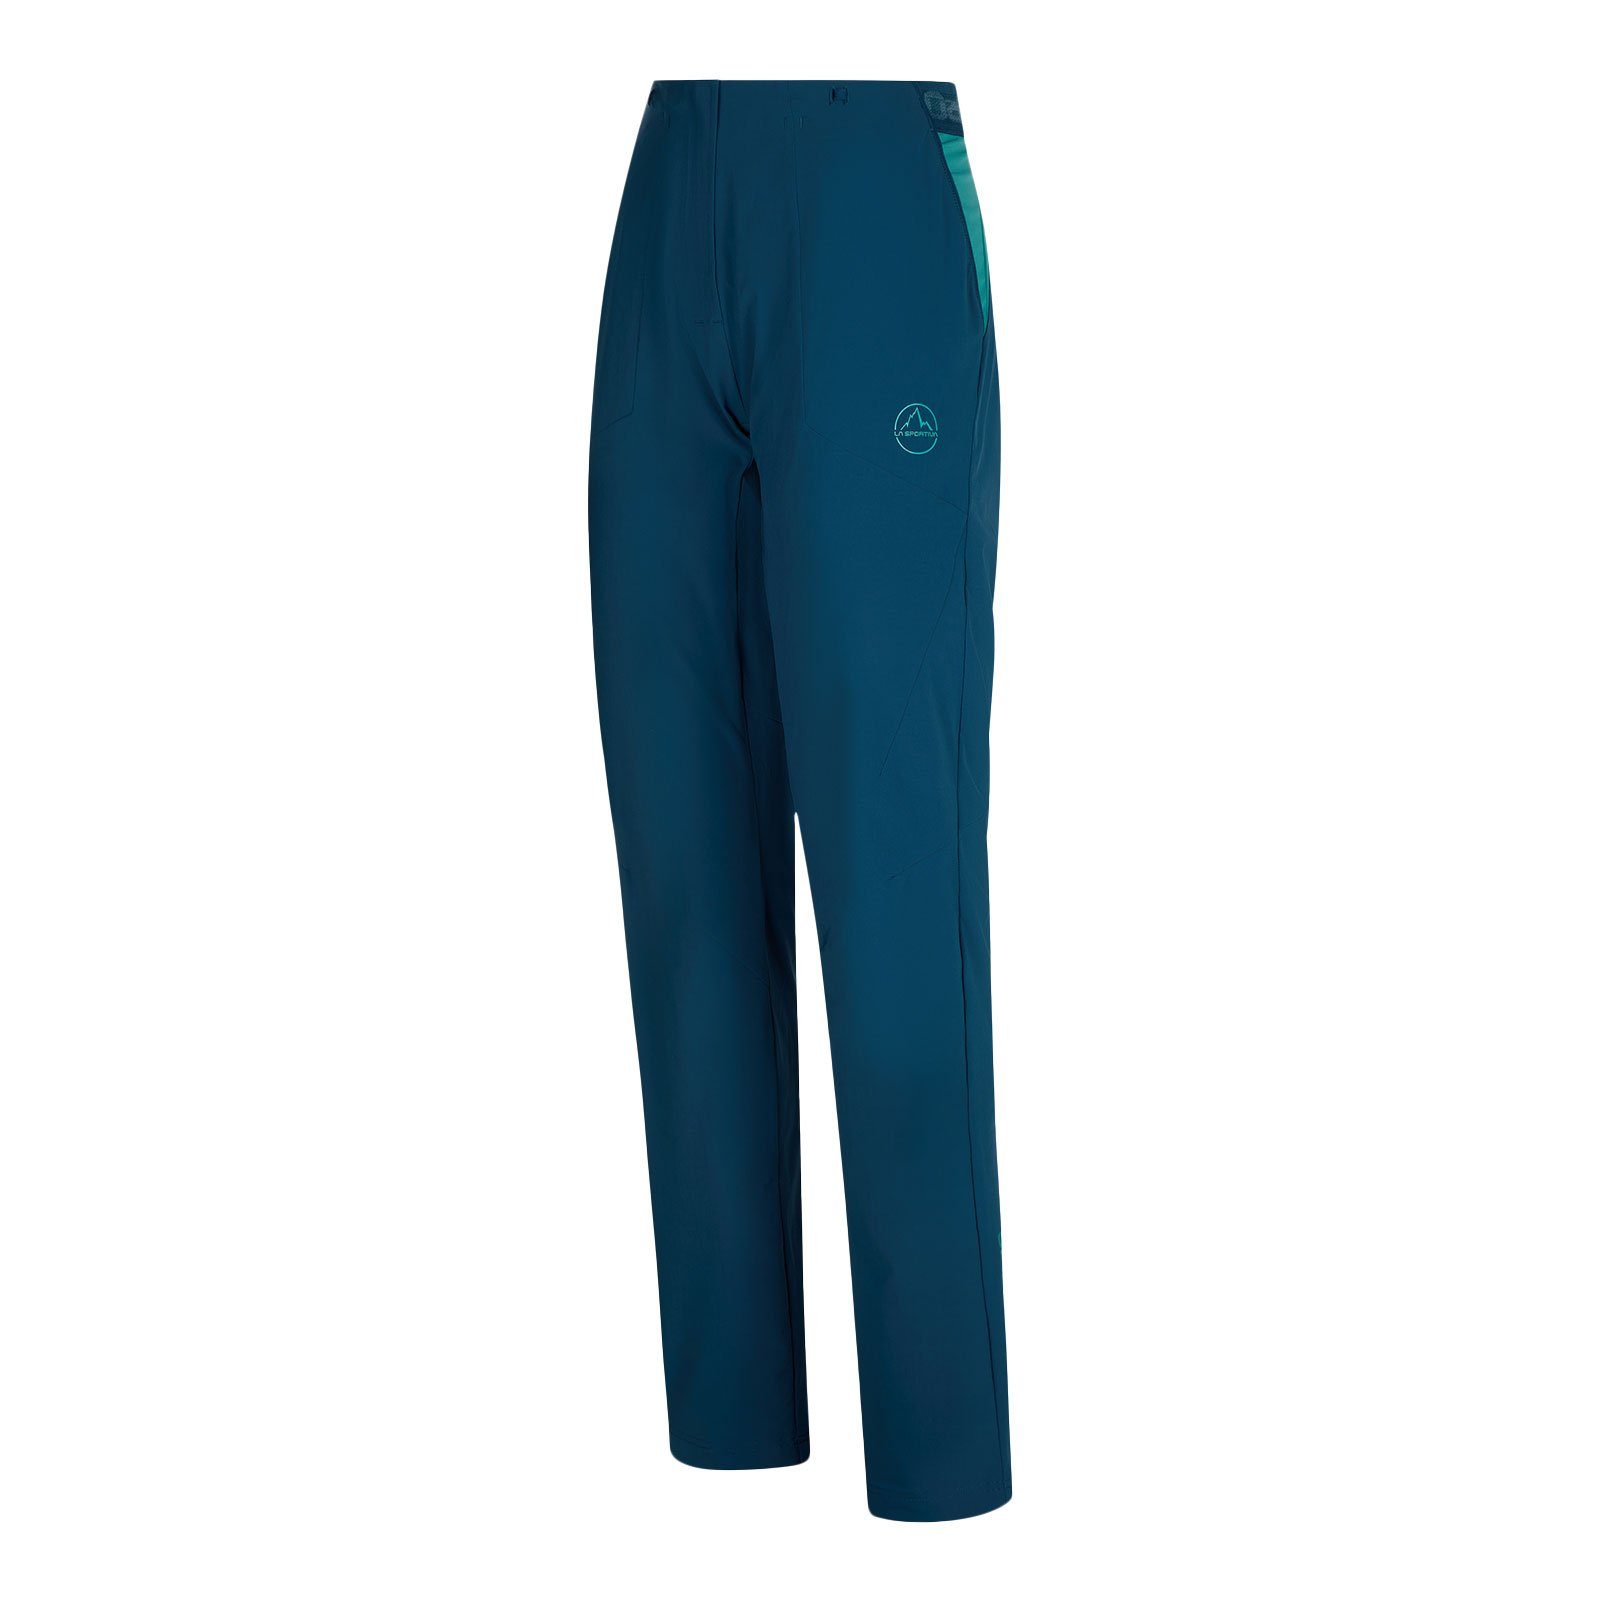 La Sportiva Trekkinghose Brush Pant aus besonders leichtem, elastischem und atmungsaktivem Material 639638 storm blue / lagoon